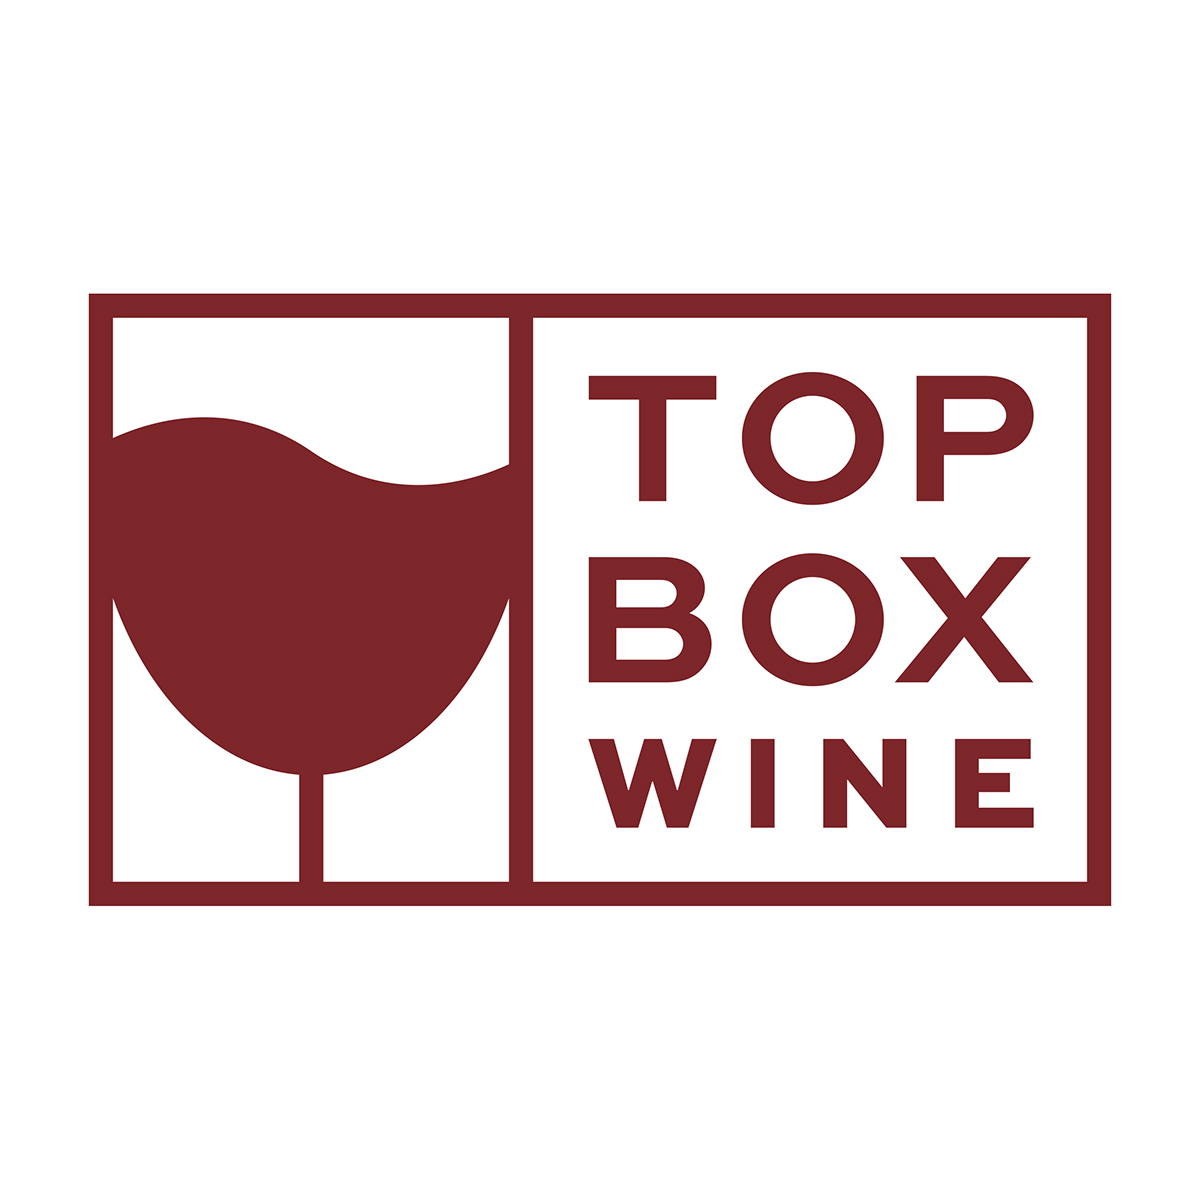 wine box wine Merlot product visualization